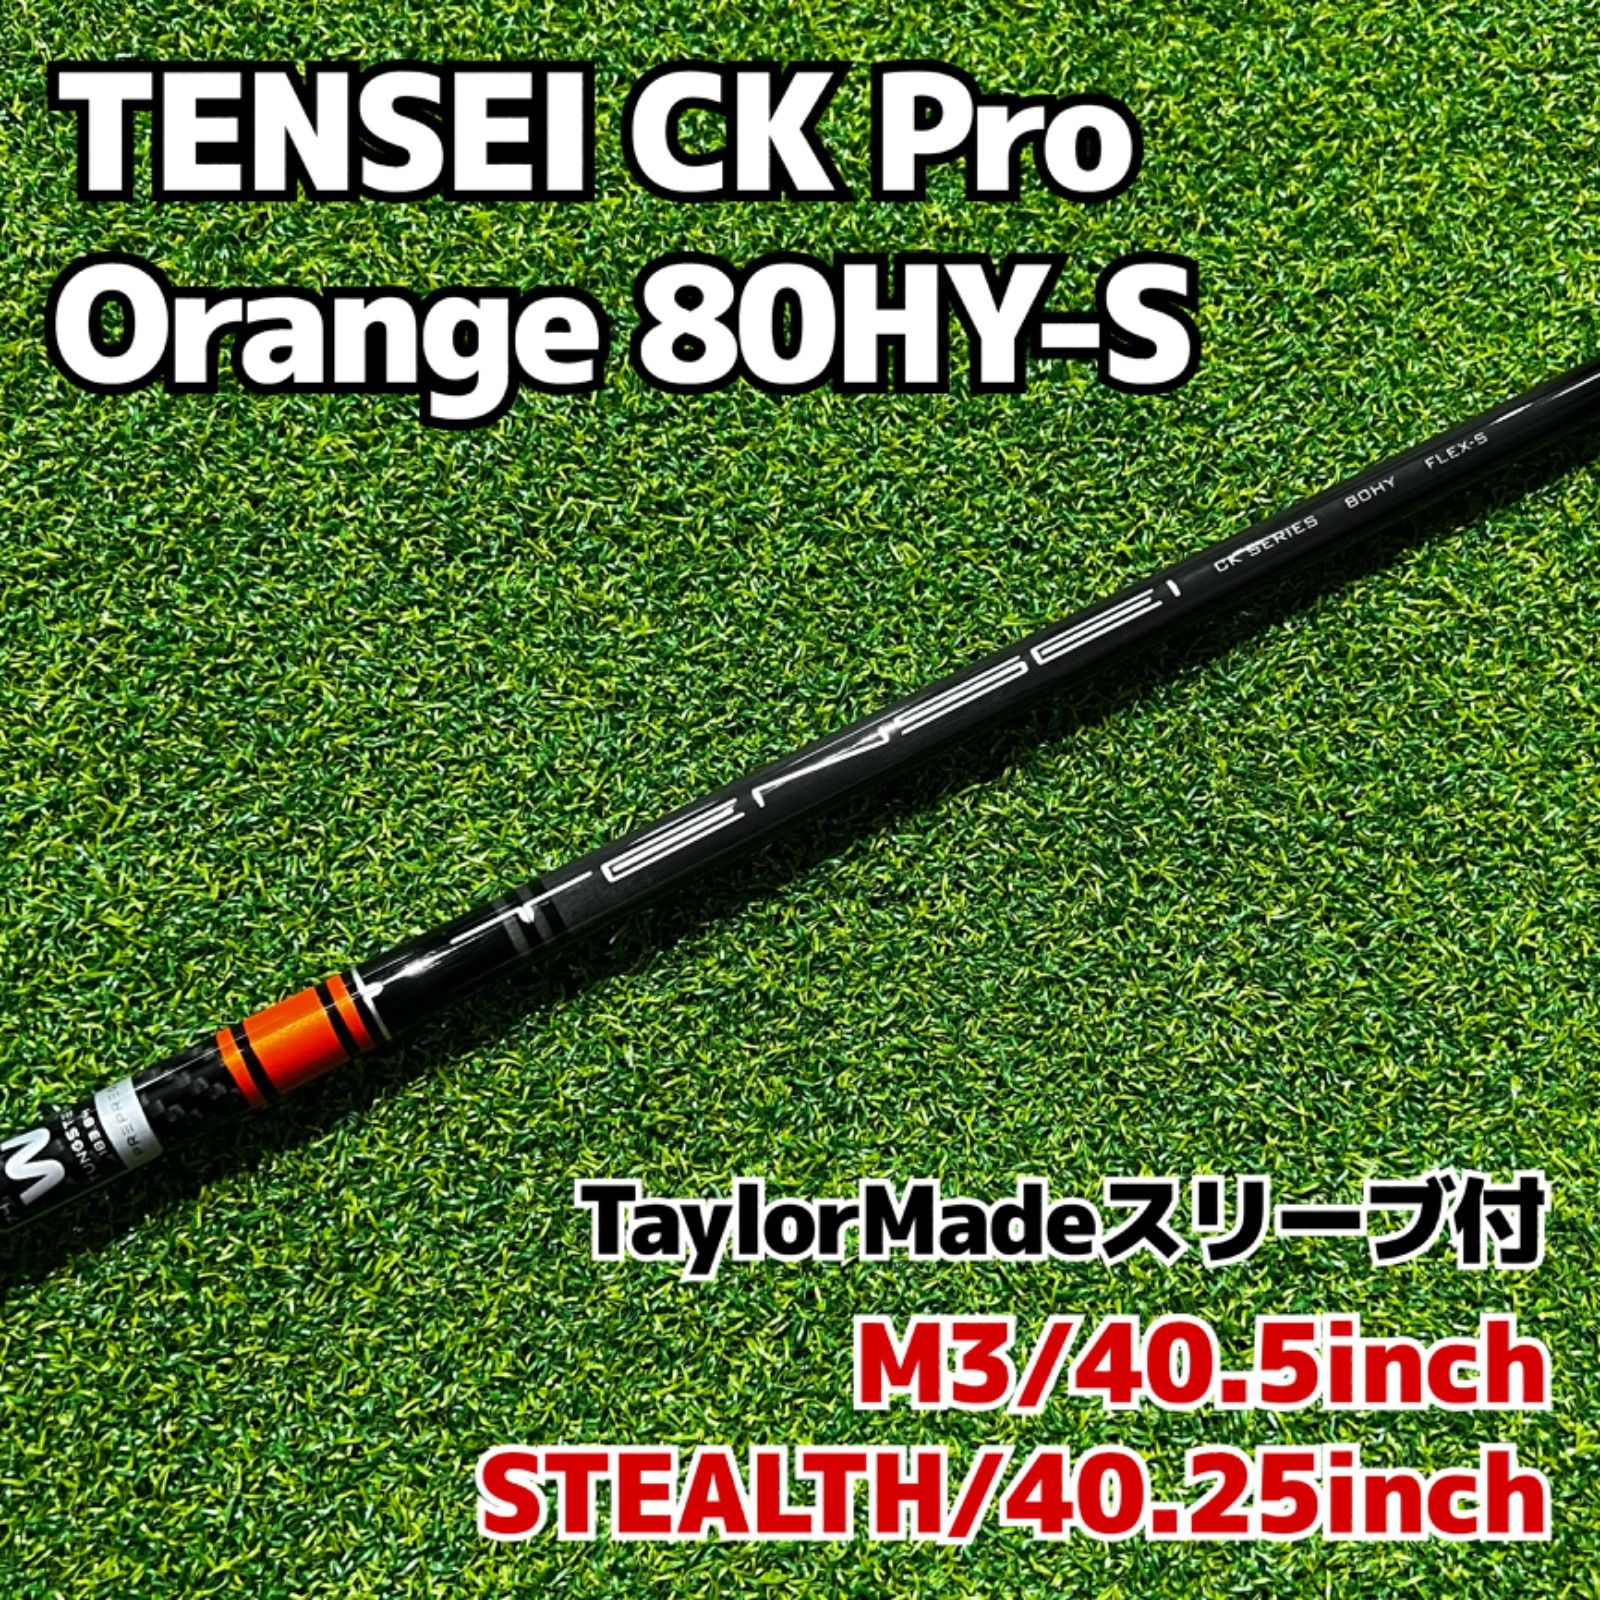 TENSEI CK Pro Orange 80HY-S - メルカリ